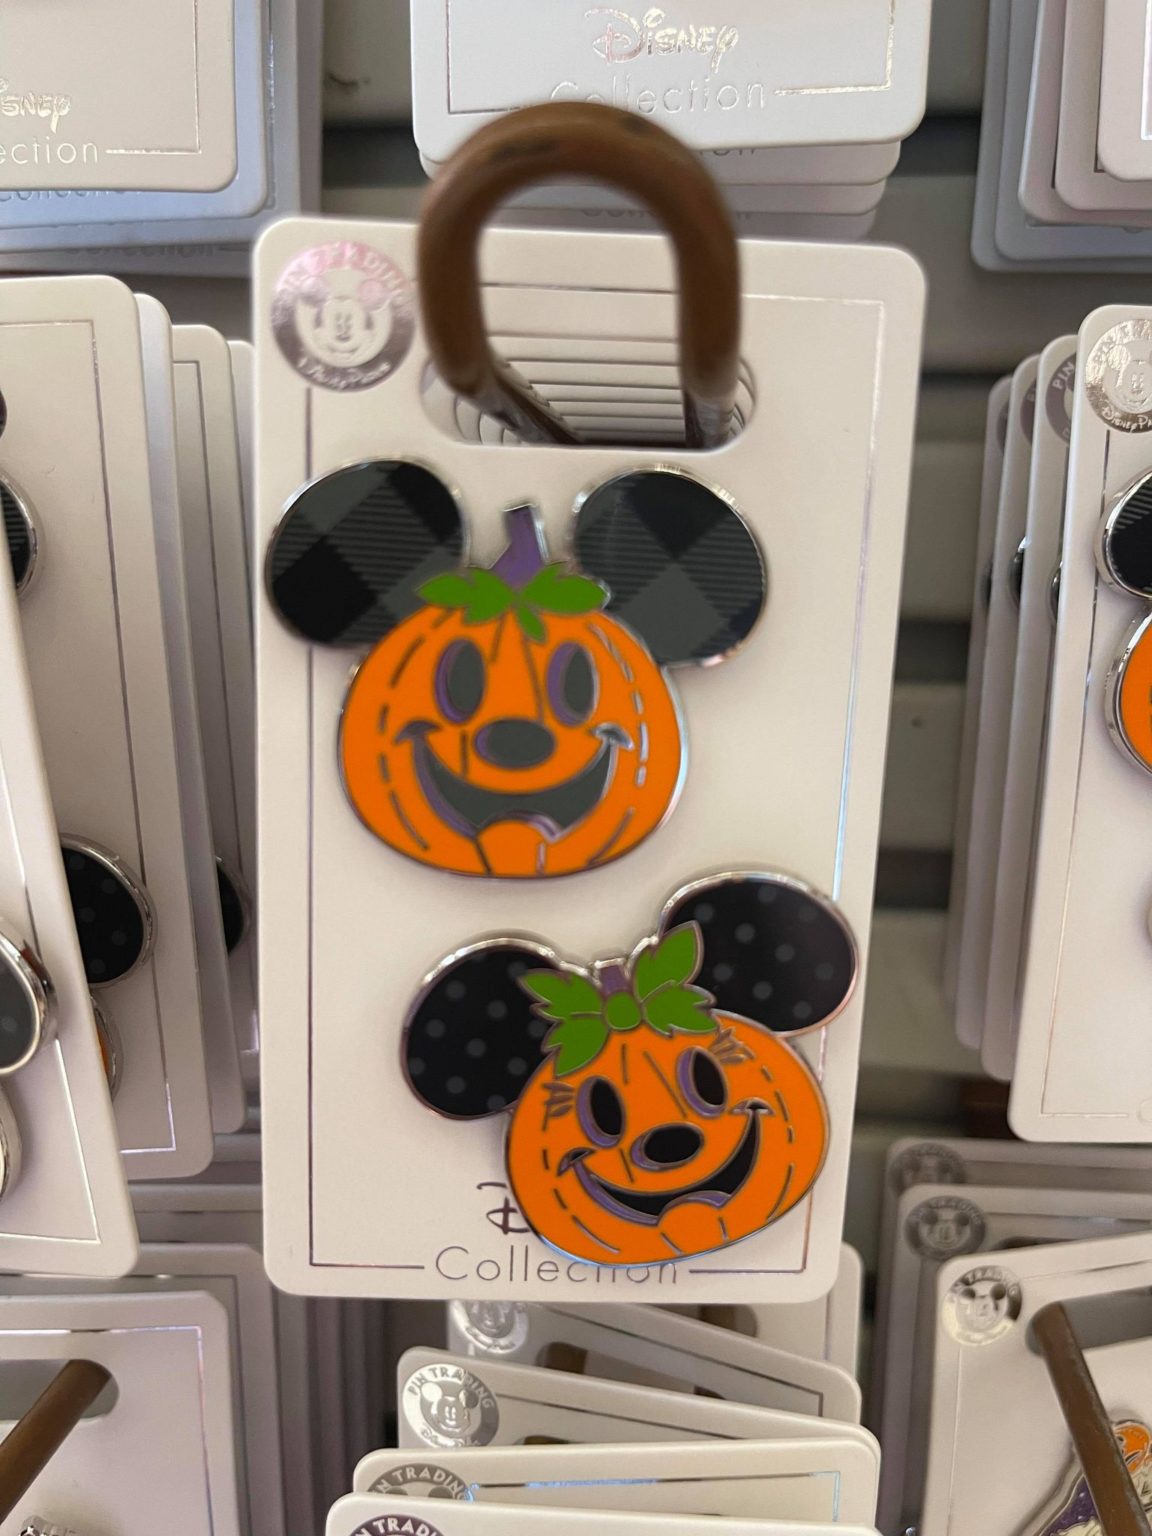 New Halloween 2021 Collection Pins Bring Spooky Season Fun to Walt